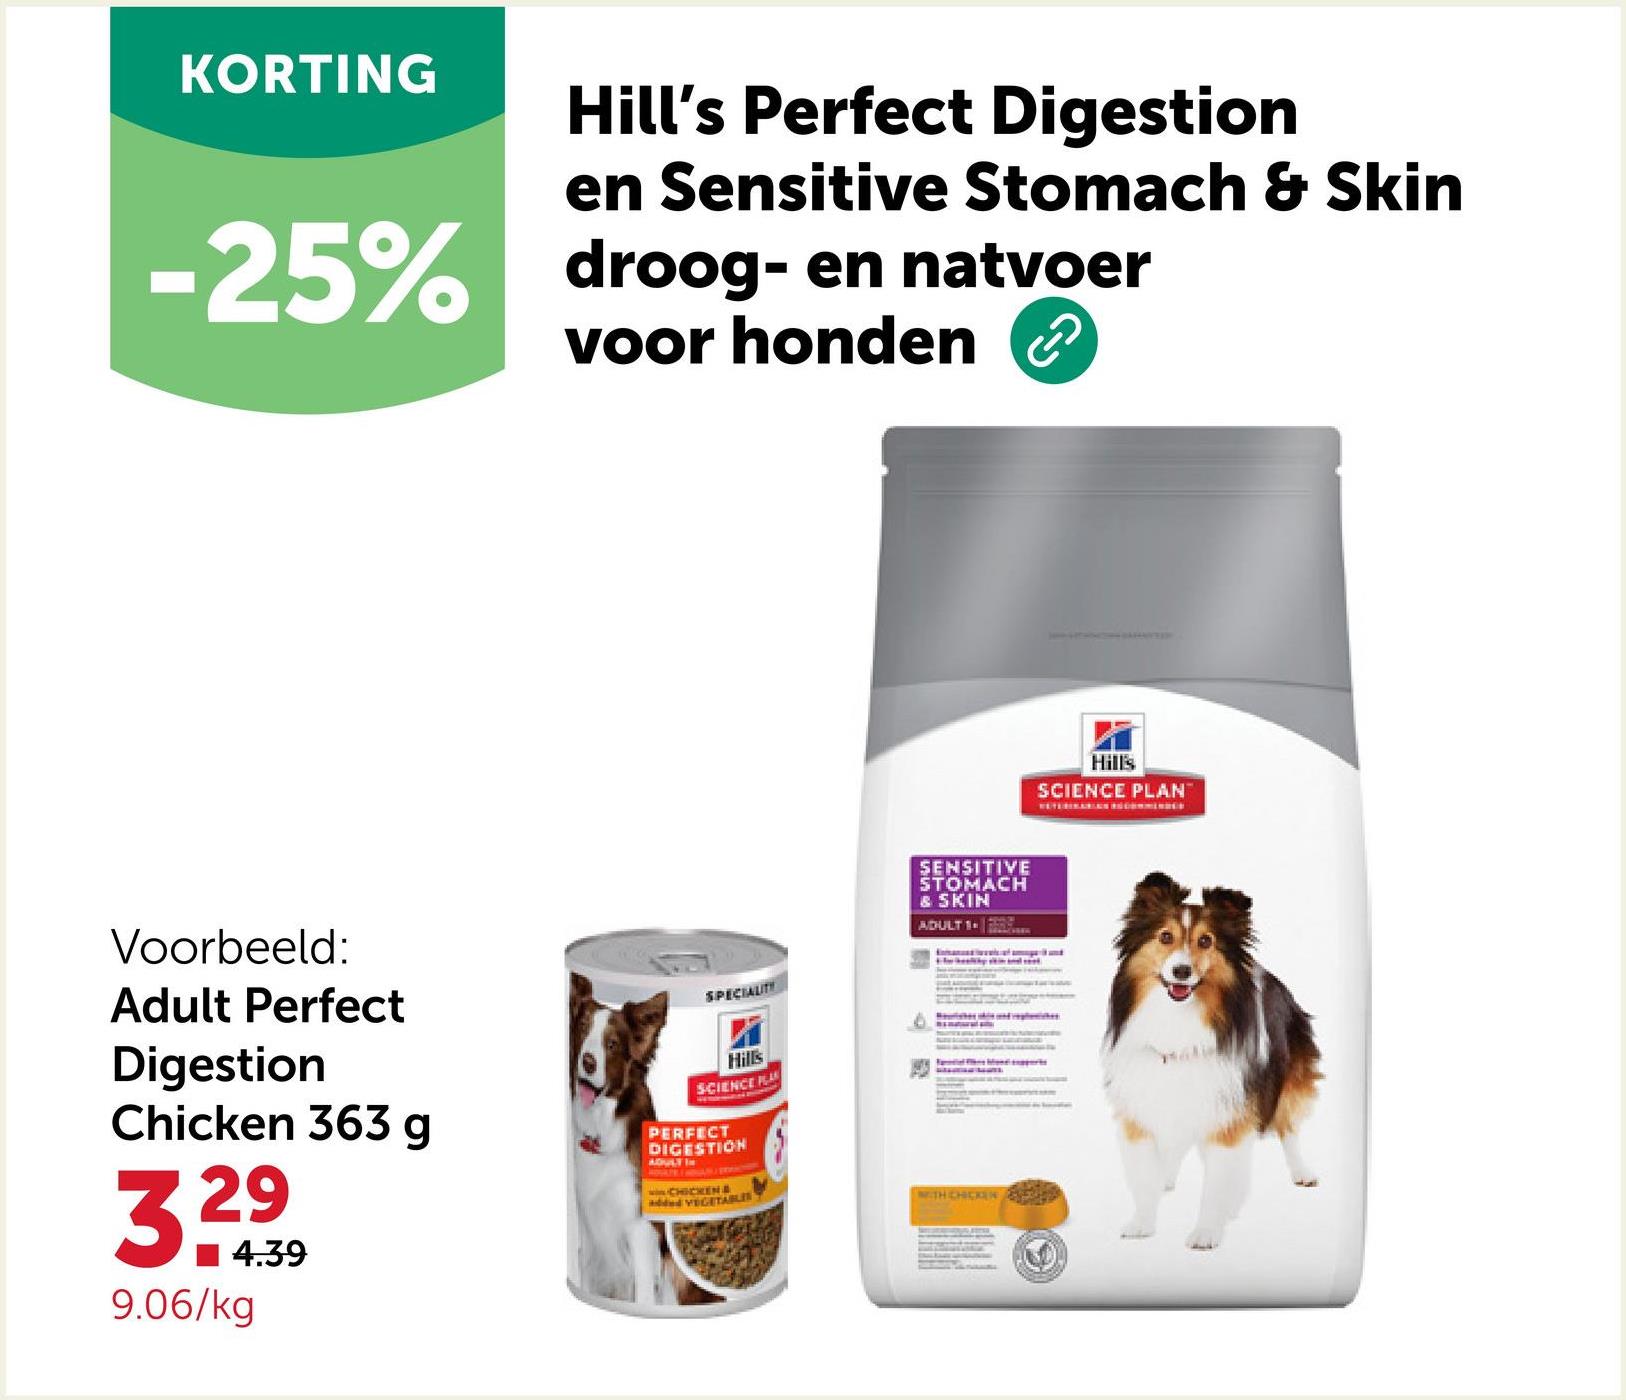 KORTING
Hill's Perfect Digestion
en Sensitive Stomach & Skin
-25% droog- en natvoer
voor honden
دی
Voorbeeld:
Adult Perfect
Digestion
Chicken 363 g
29
33
■4.39
9.06/kg
SPECIALITY
Hills
SCIENCE PLA
PERFECT
DIGESTION
ADULT IN
wwwCHICKEN &
added VEGETABLES
SENSITIVE
STOMACH
& SKIN
ADULT 1
WITH CHICKEN
Hill's
SCIENCE PLAN